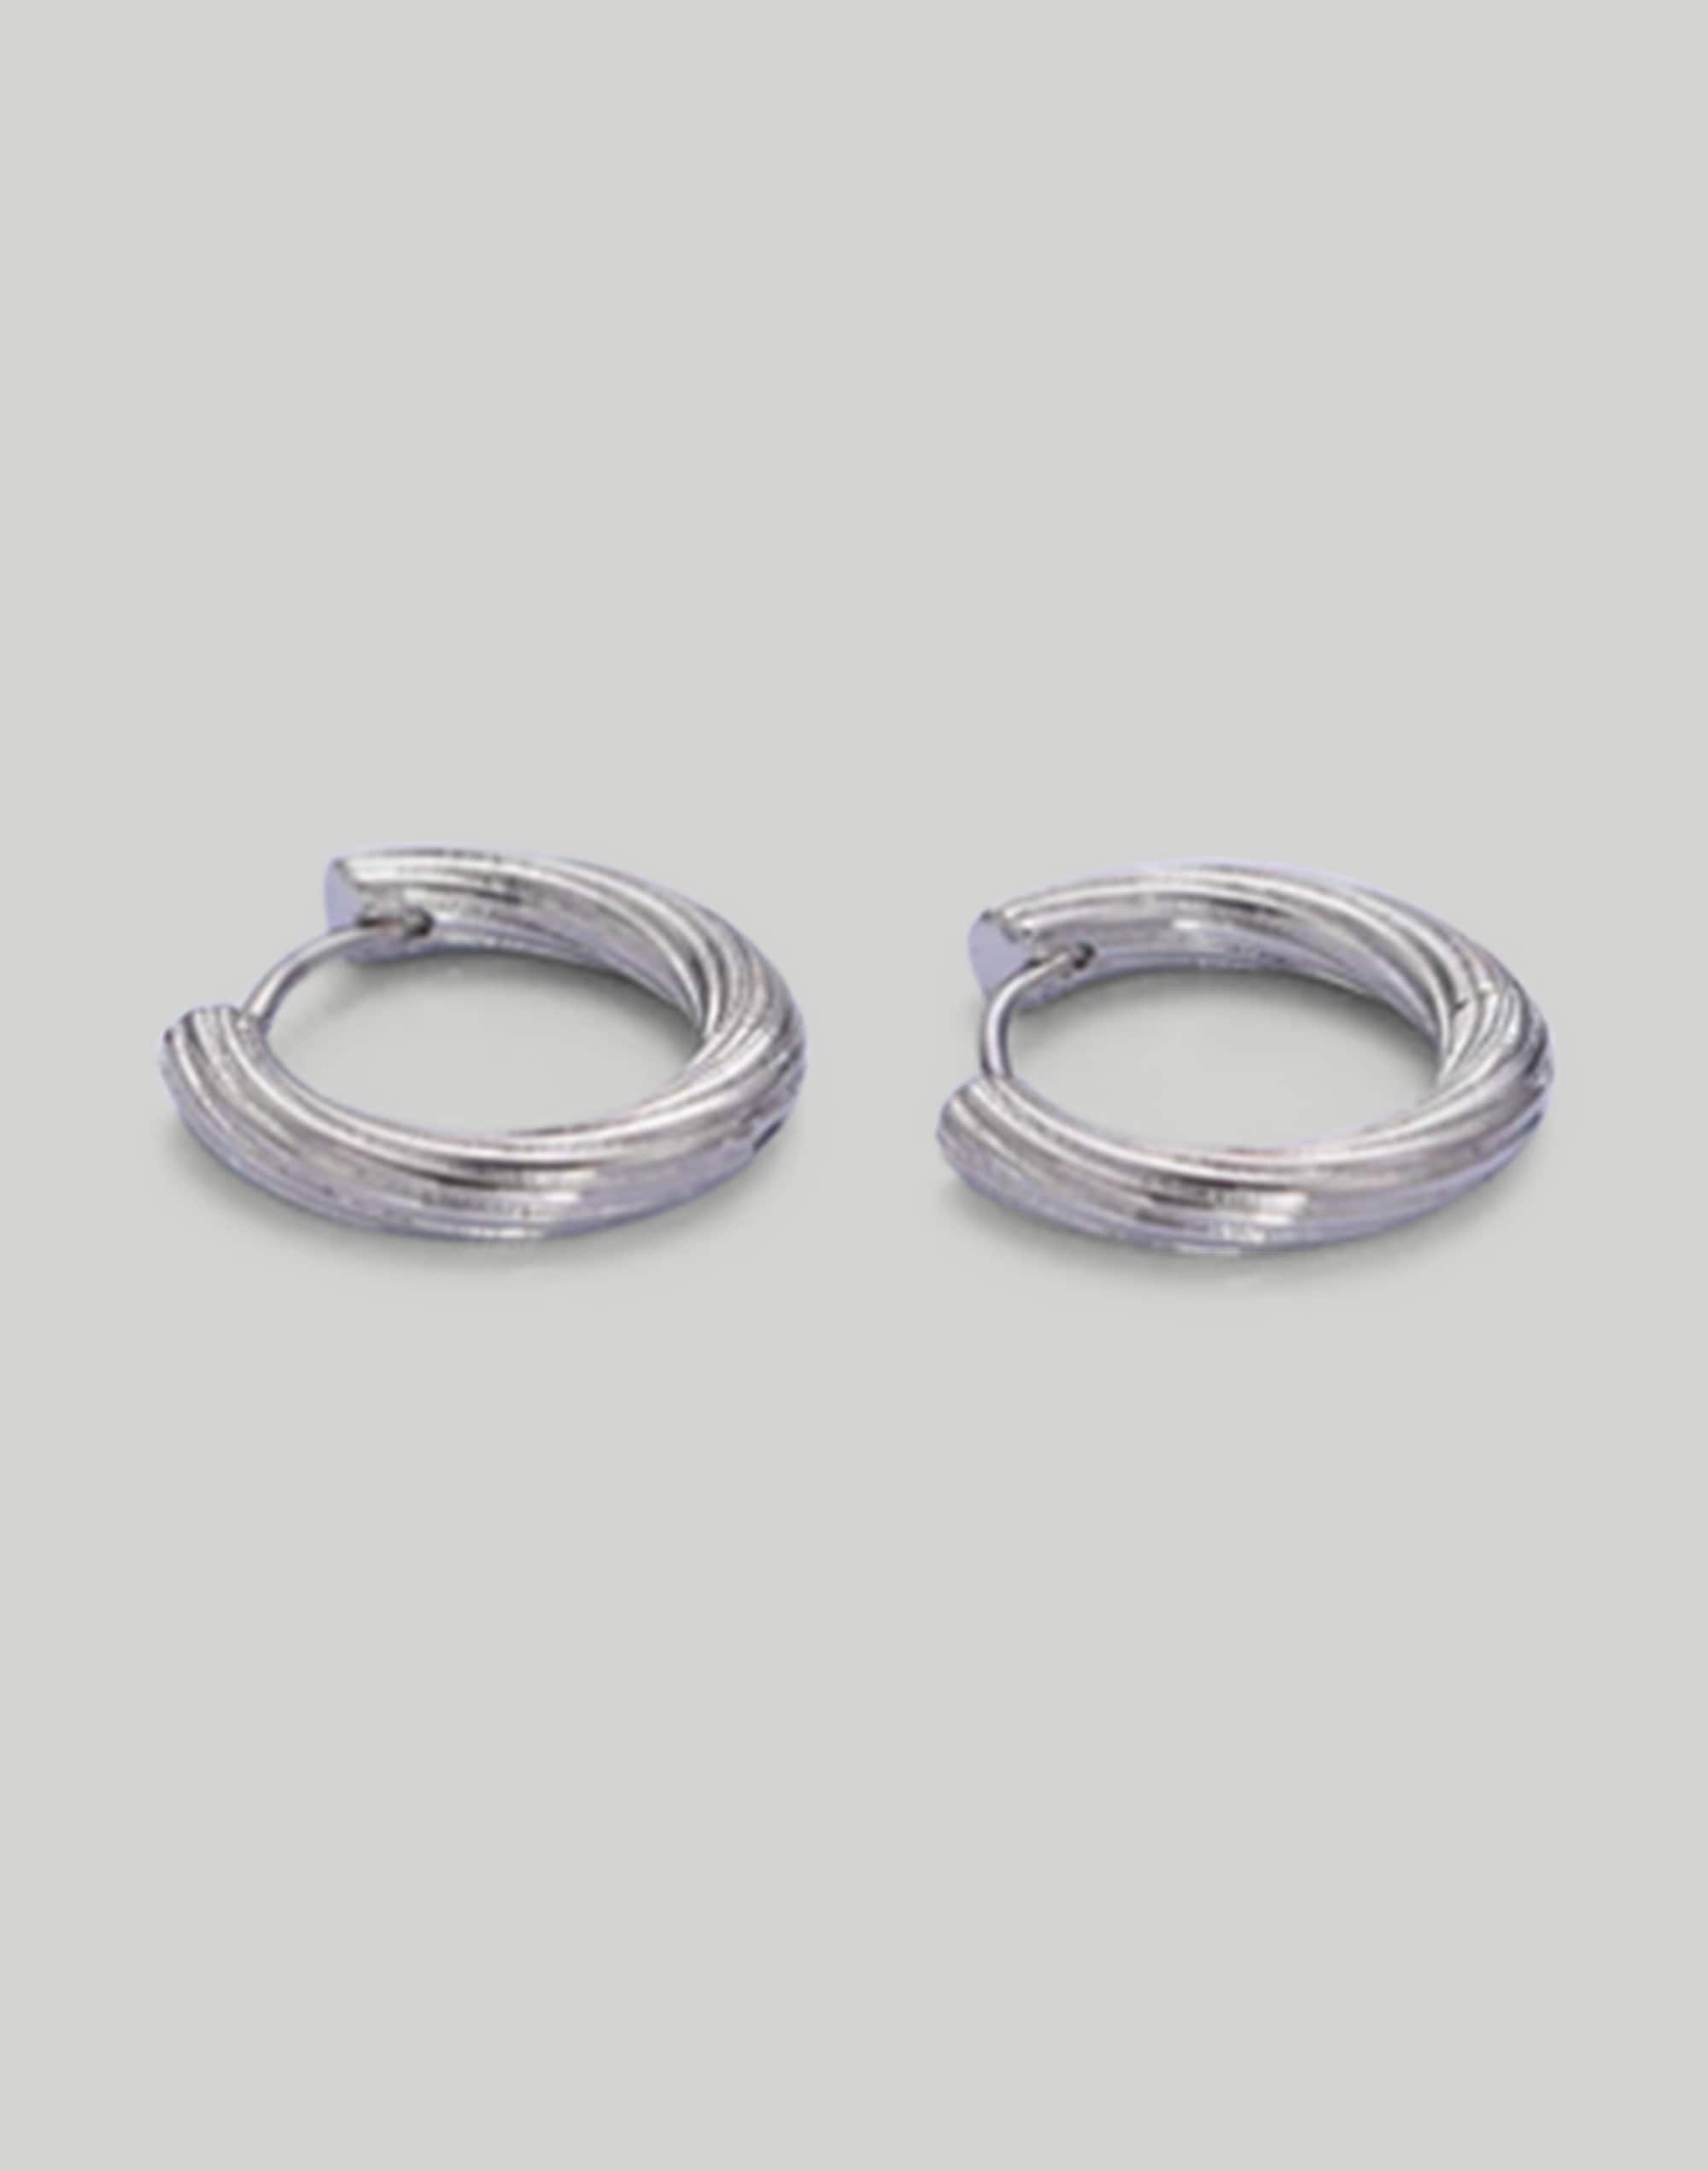 Abcrete & Co. The Silver Lining Huggie Earrings